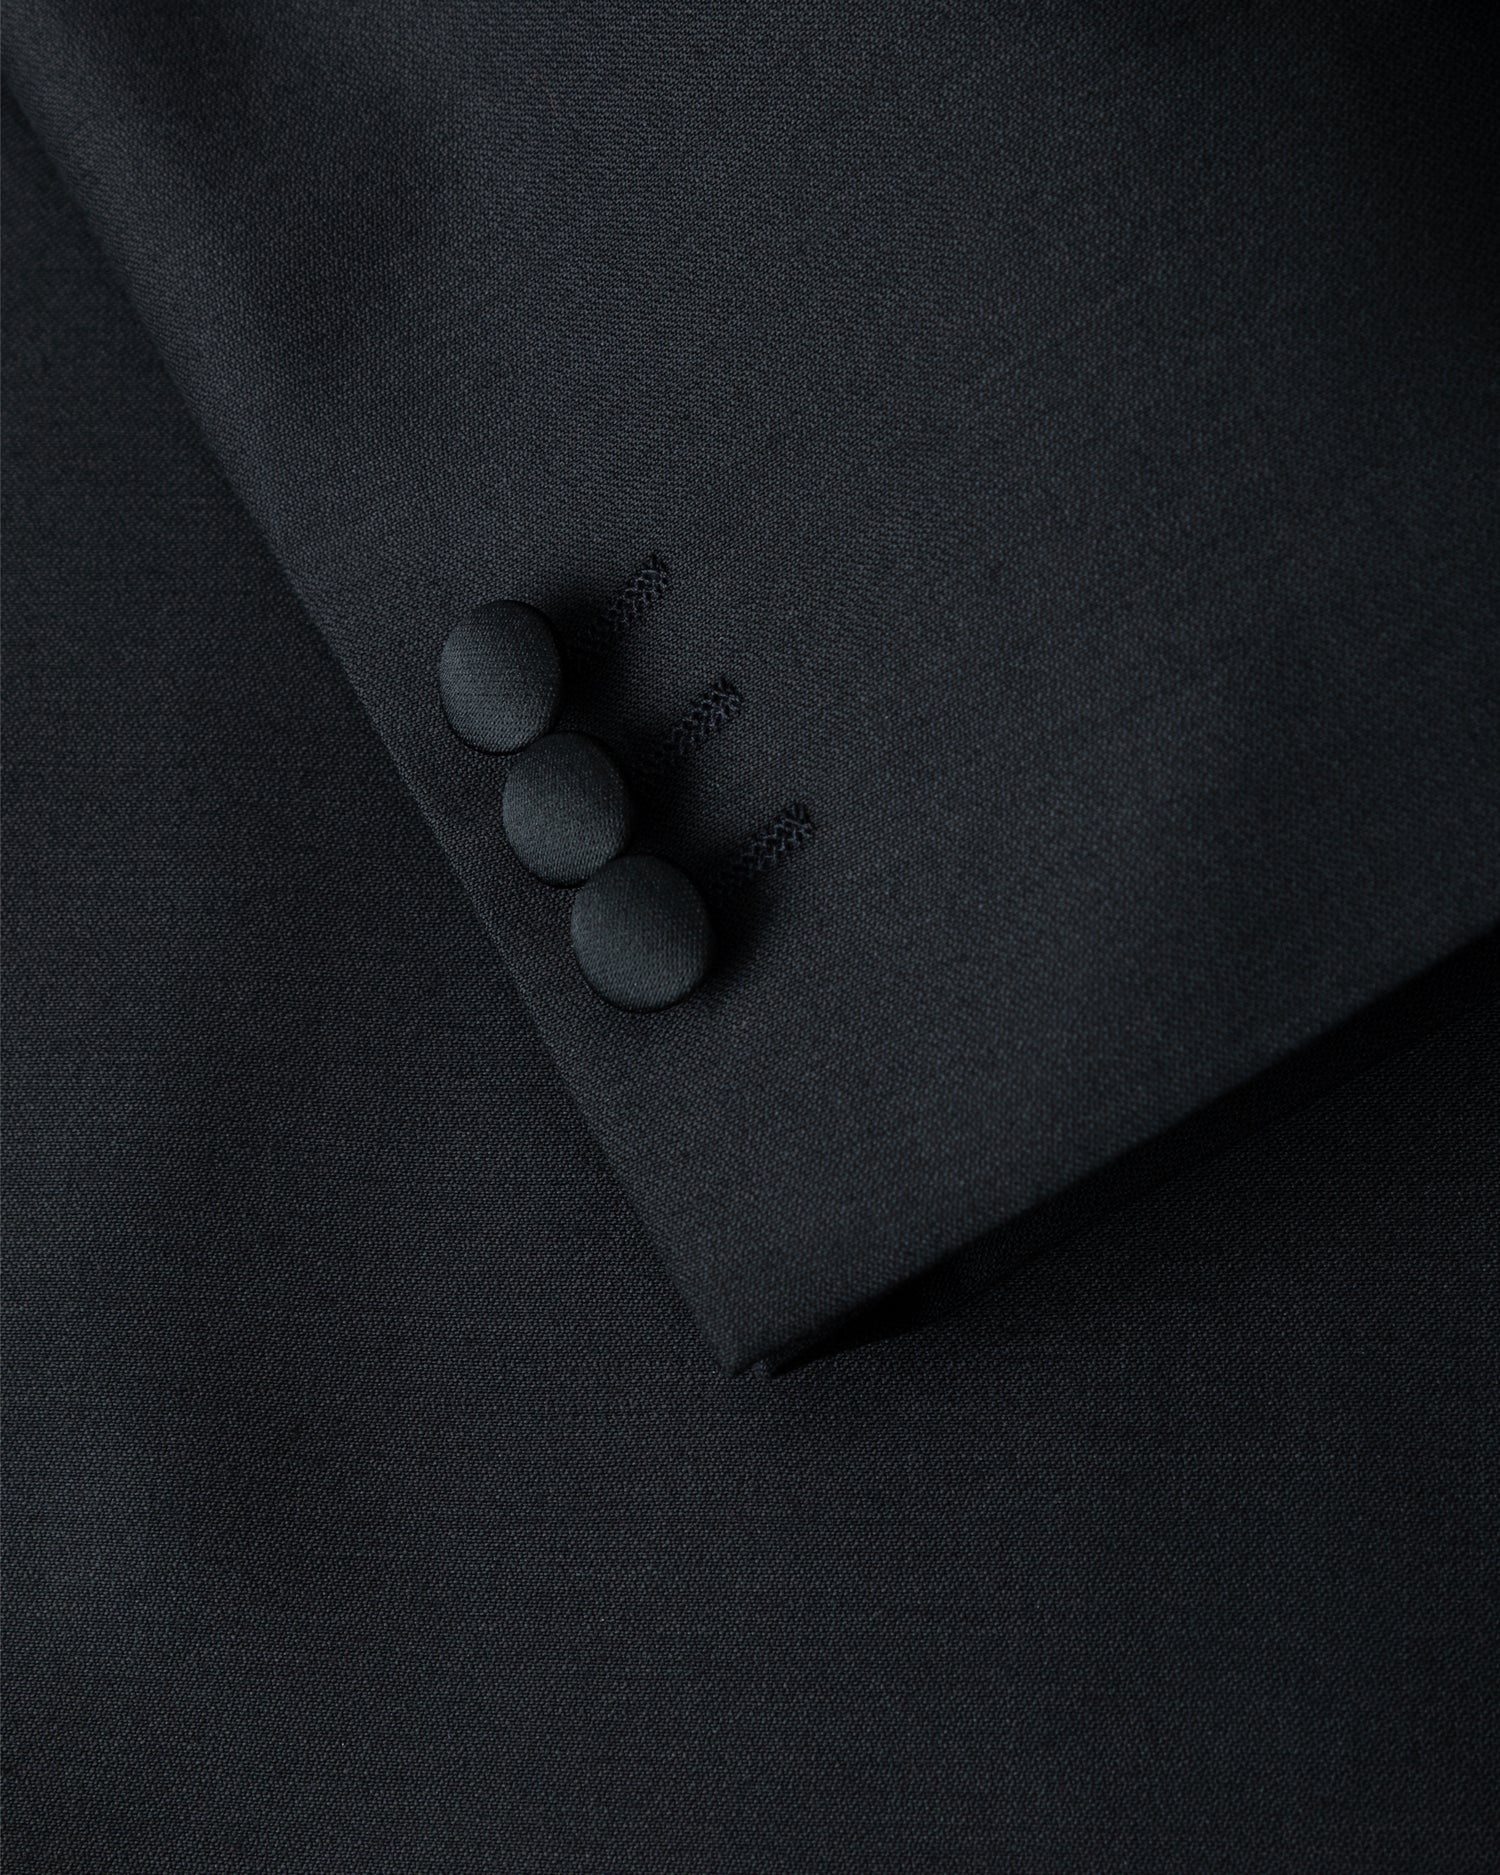 Tuxedo jacket with peak lapel collar (8514271805770)